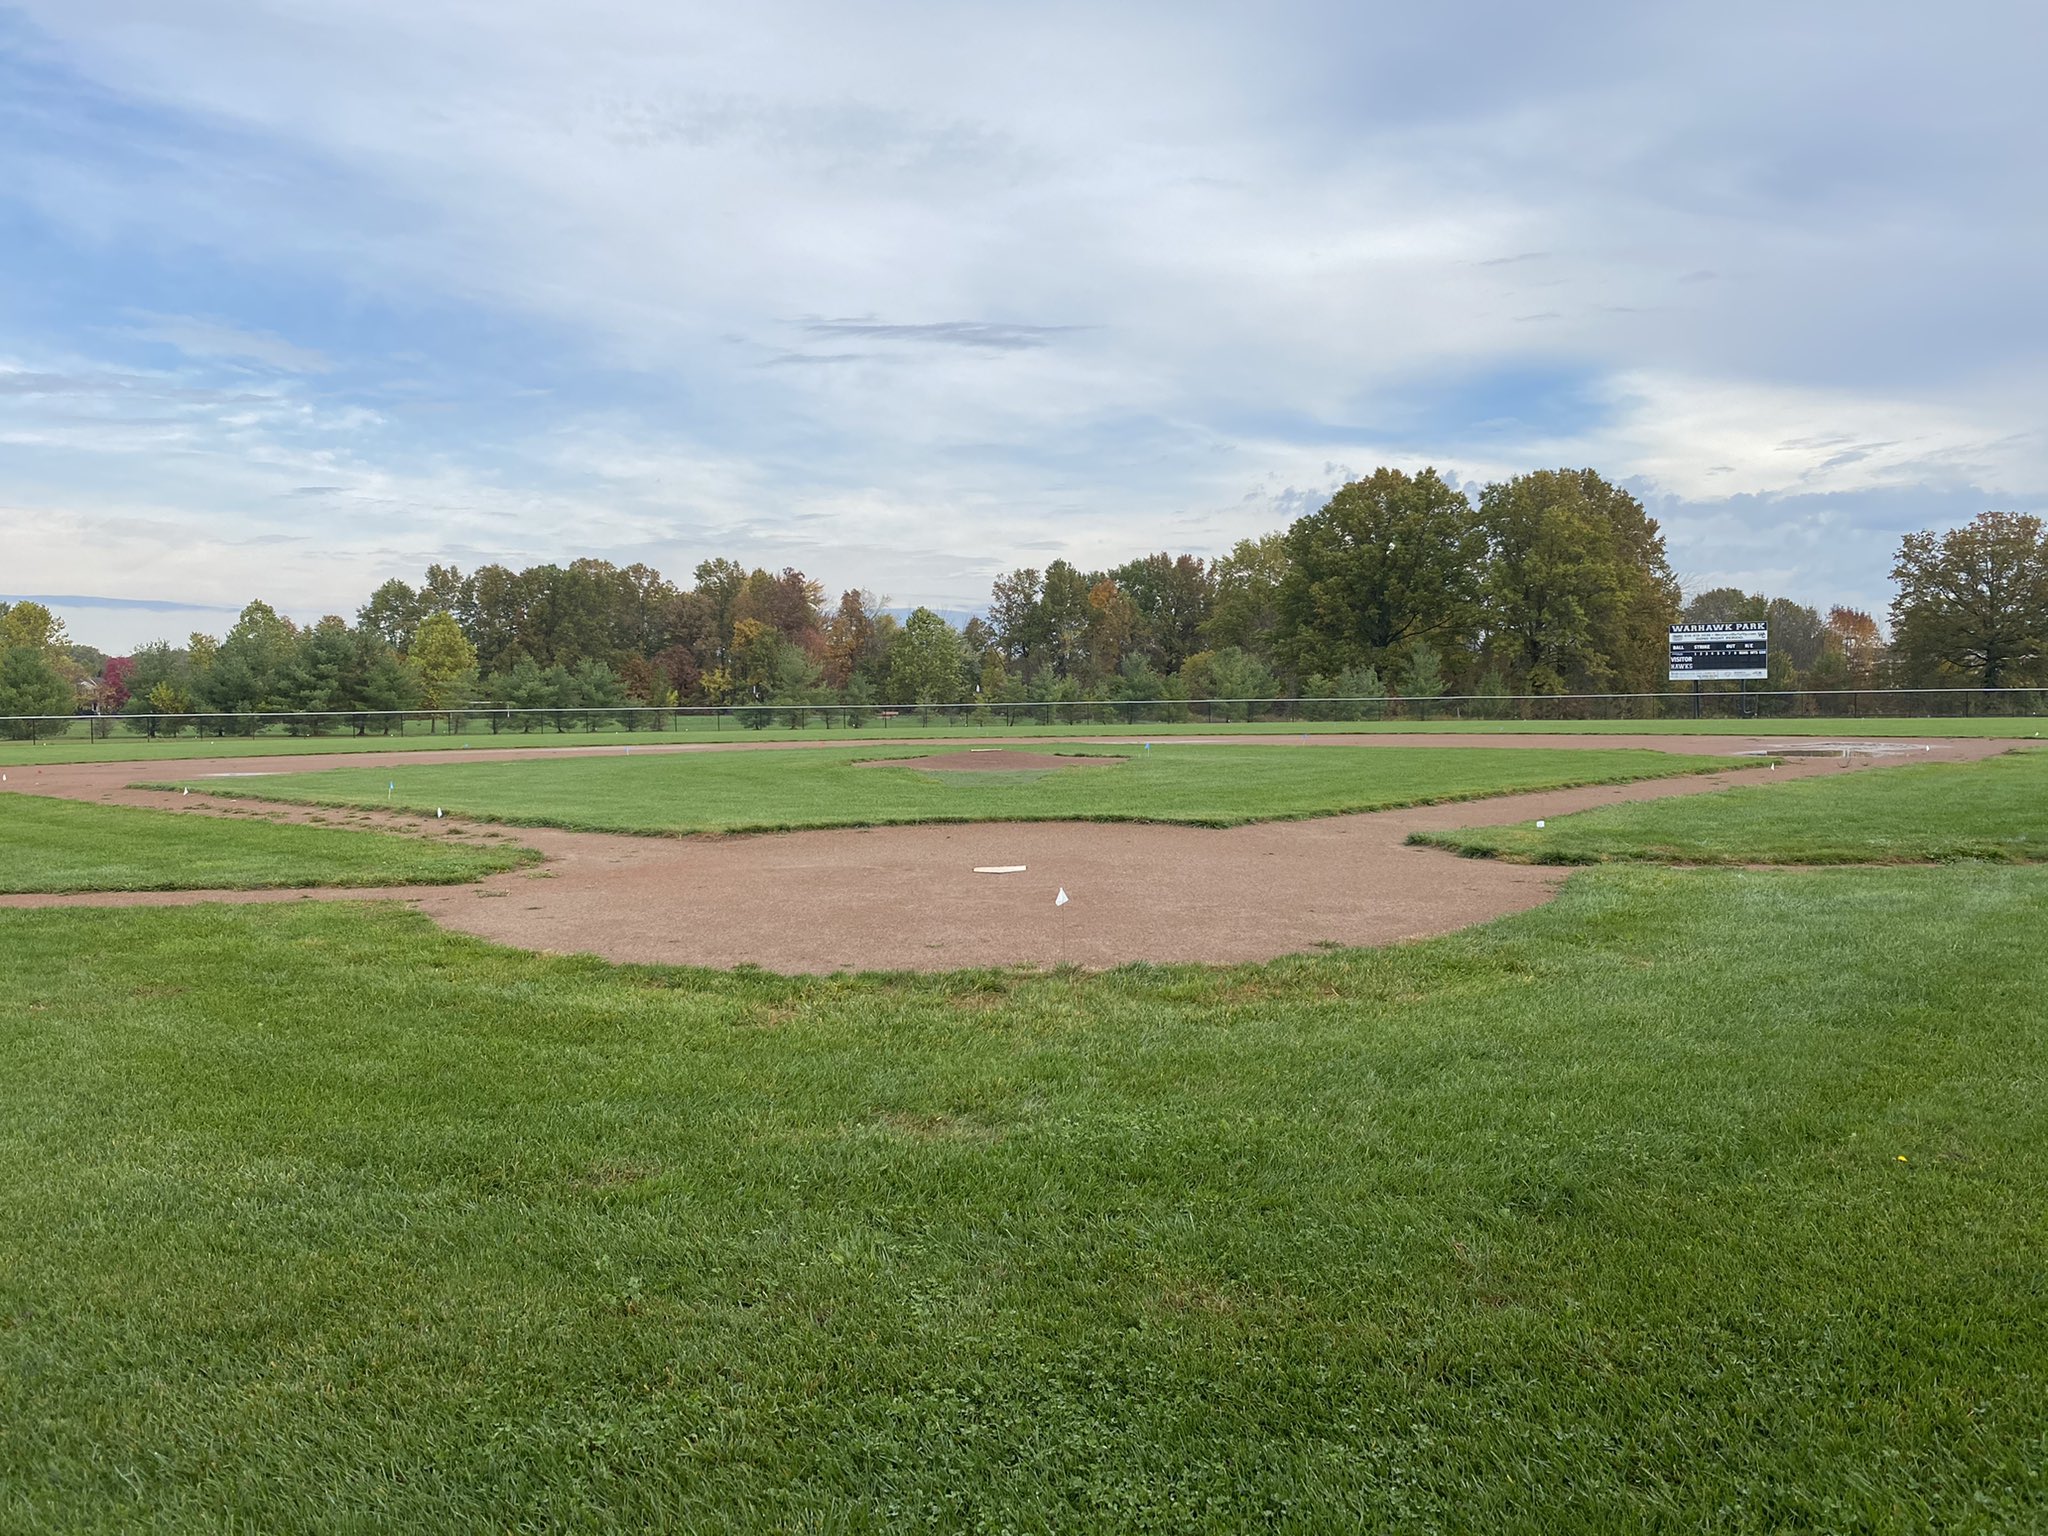 Baseball field with scoreboard in the outfield.